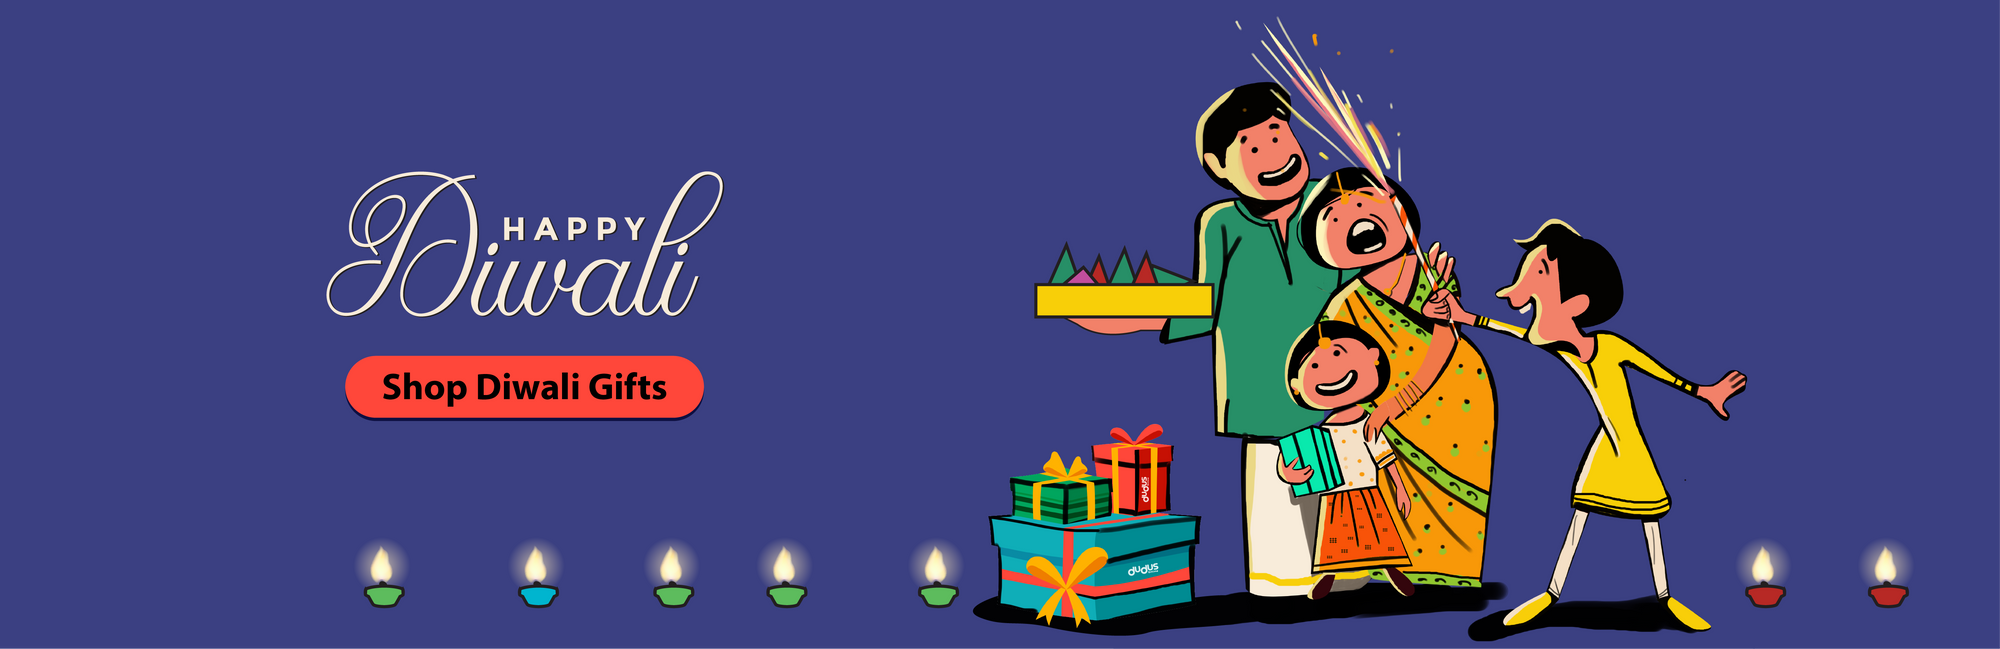 Shop Diwali Gifts at Dudus Online